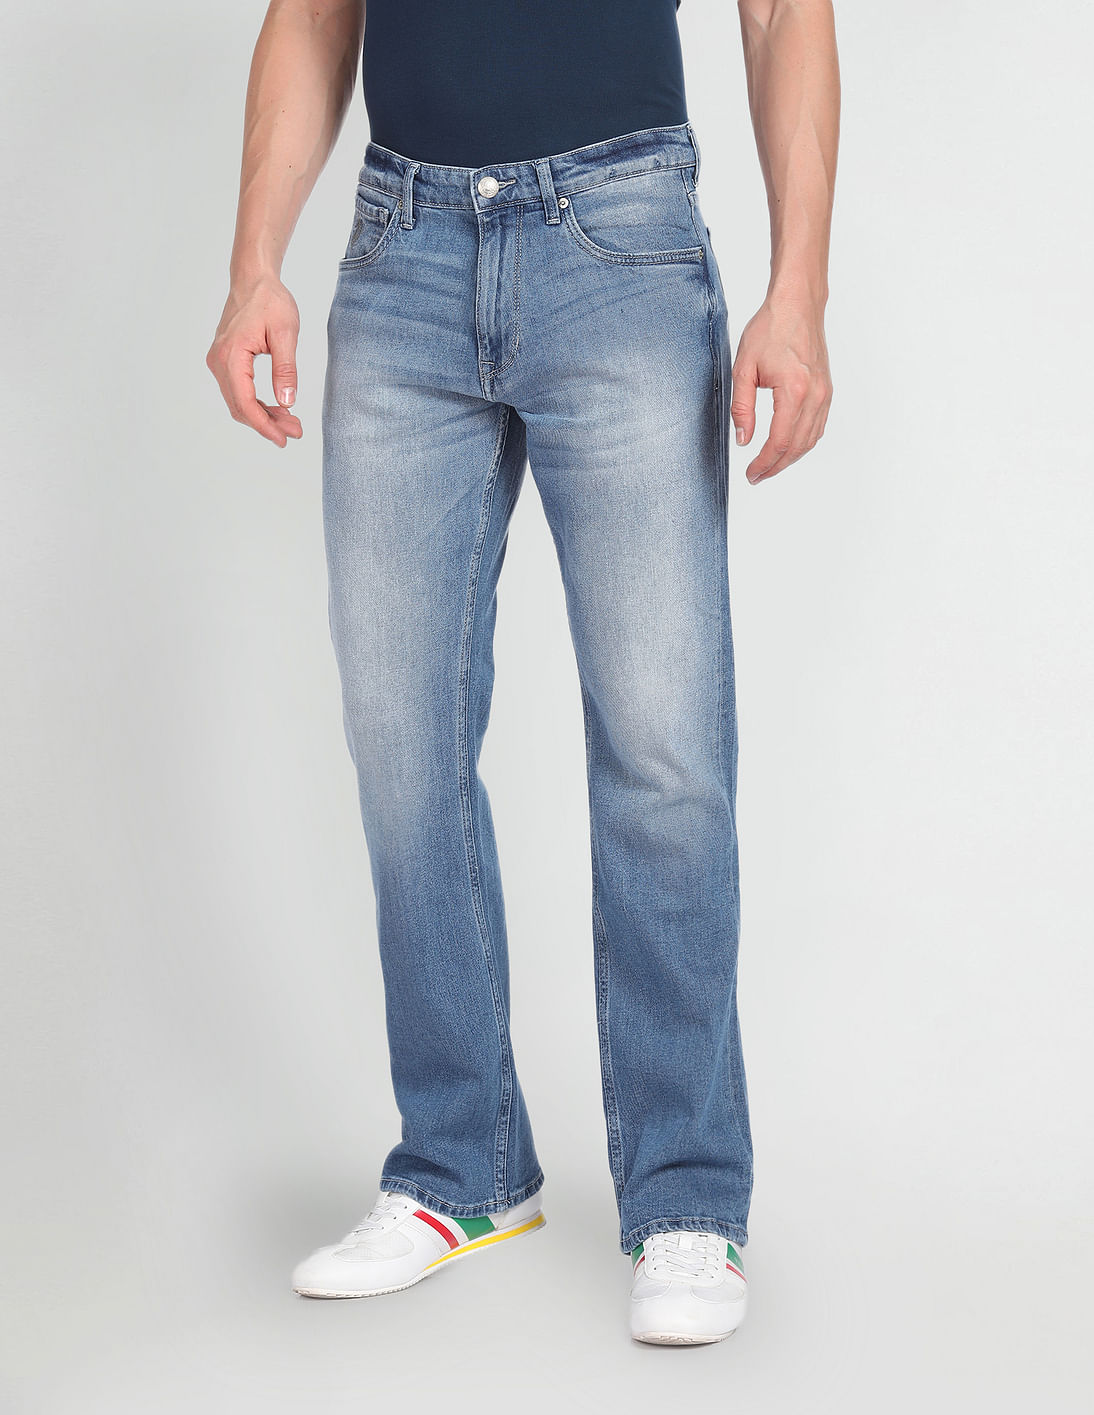 Buy U.S. Polo Assn. Denim Co. Connor Bootcut Fit Blue Jeans - NNNOW.com